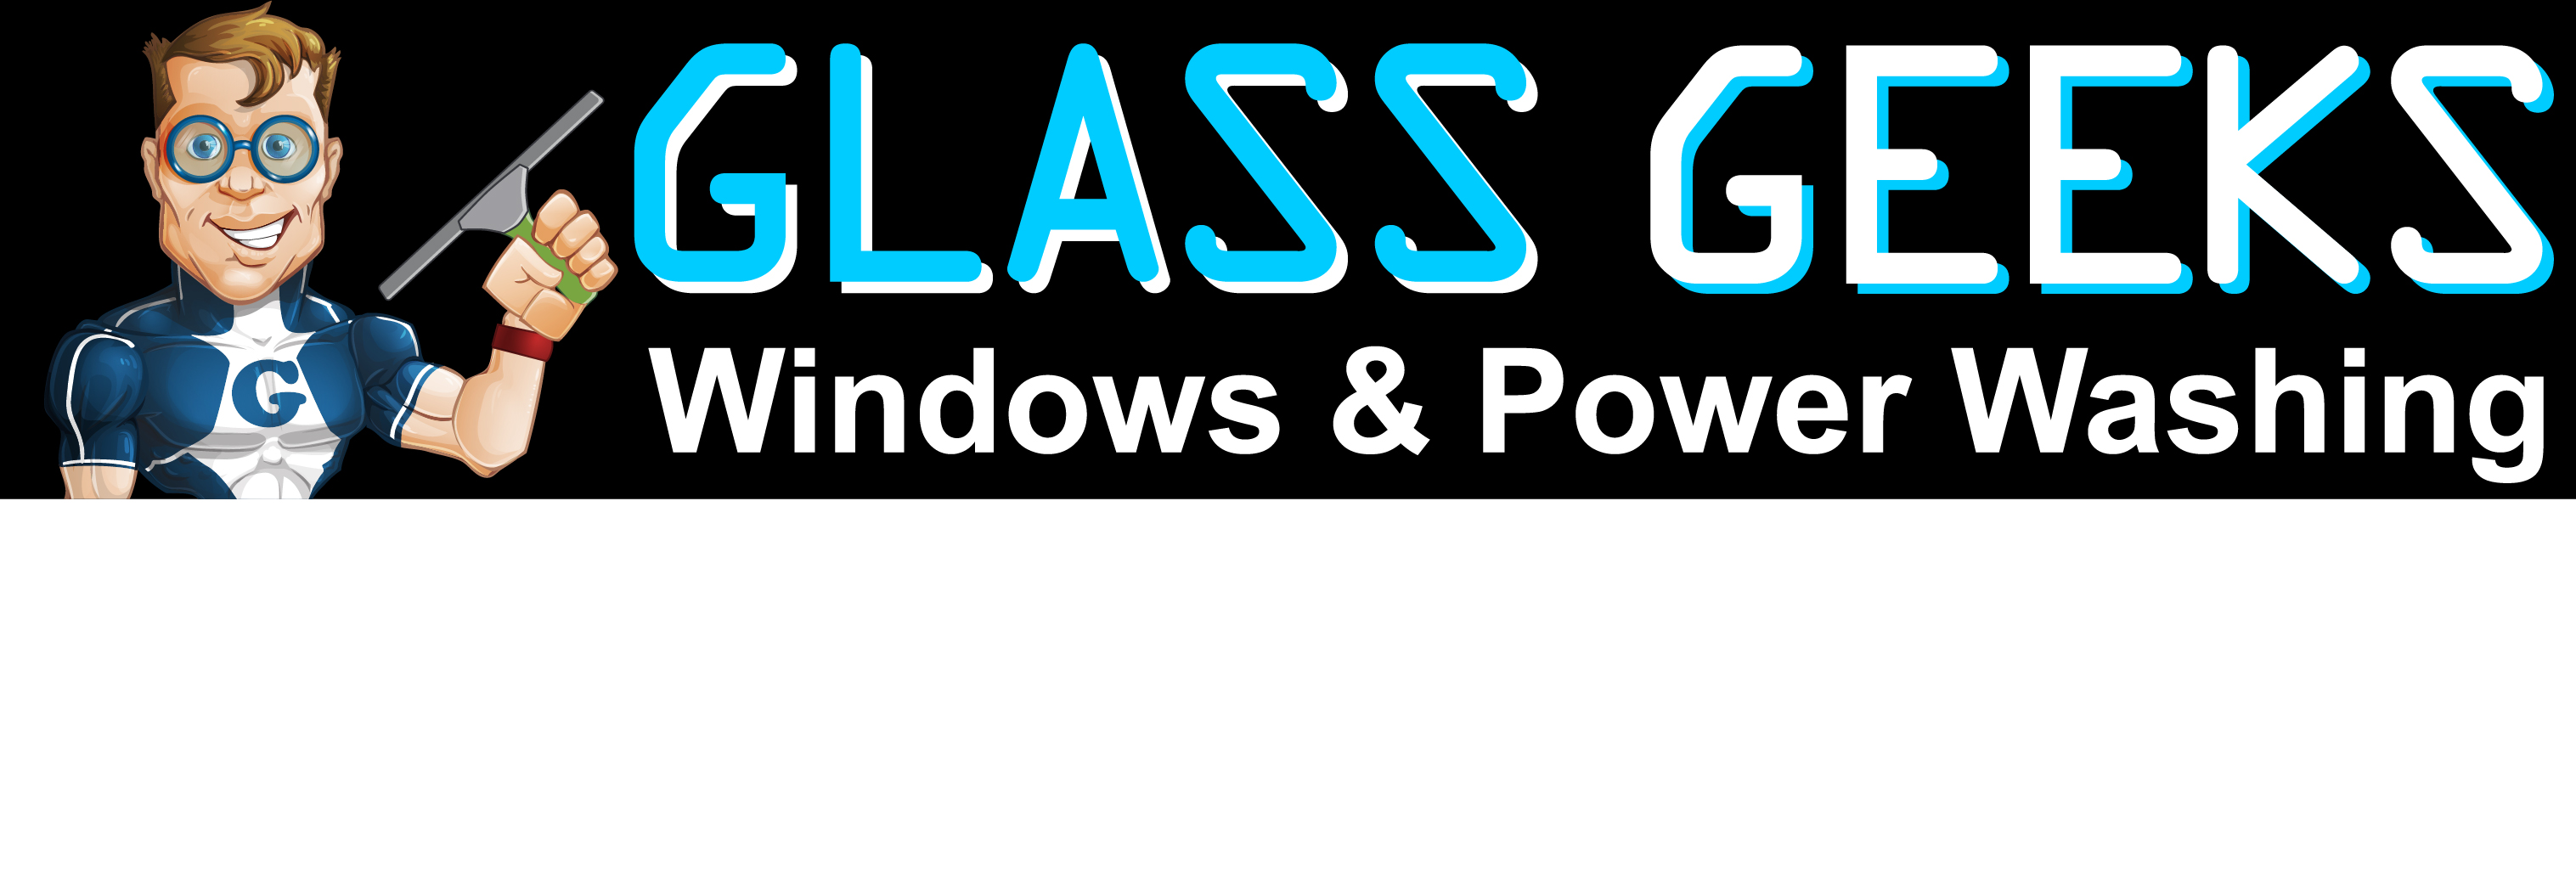 Glass Geeks Logo